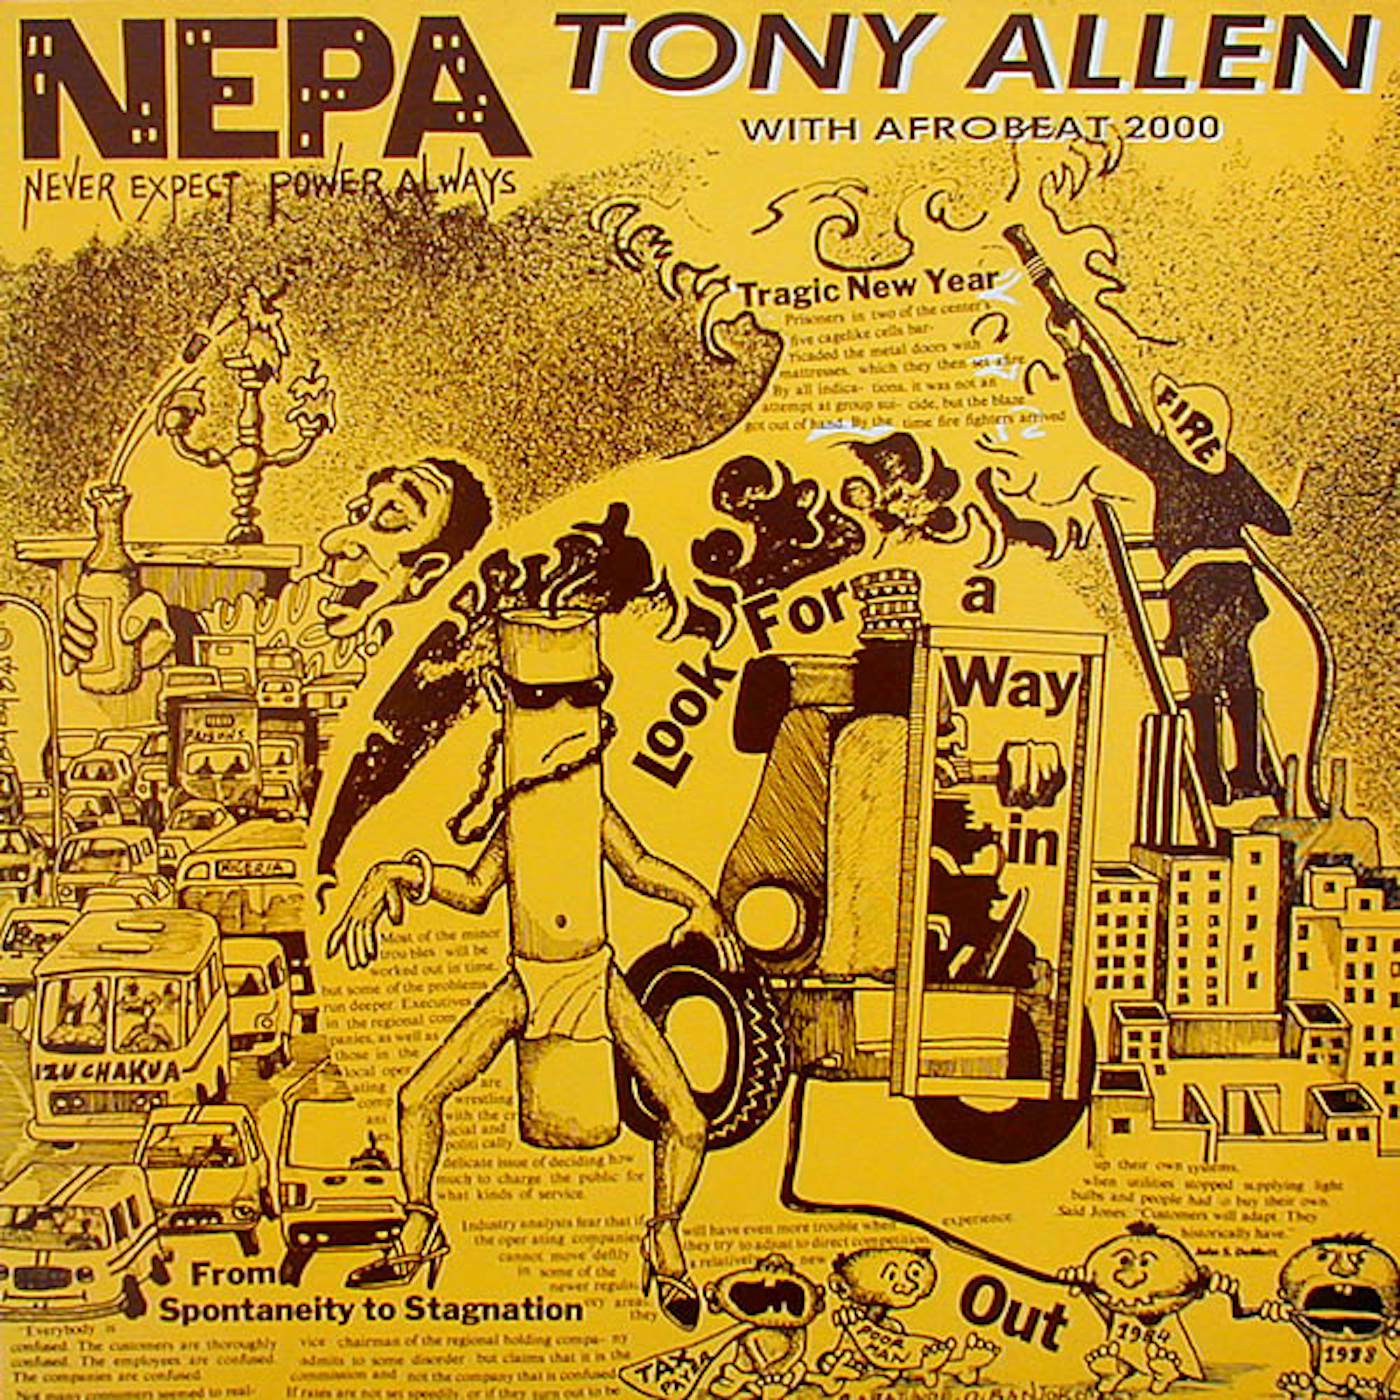 Tony Allen N.E.P.A. (Never Expect Power Always) Vinyl Record